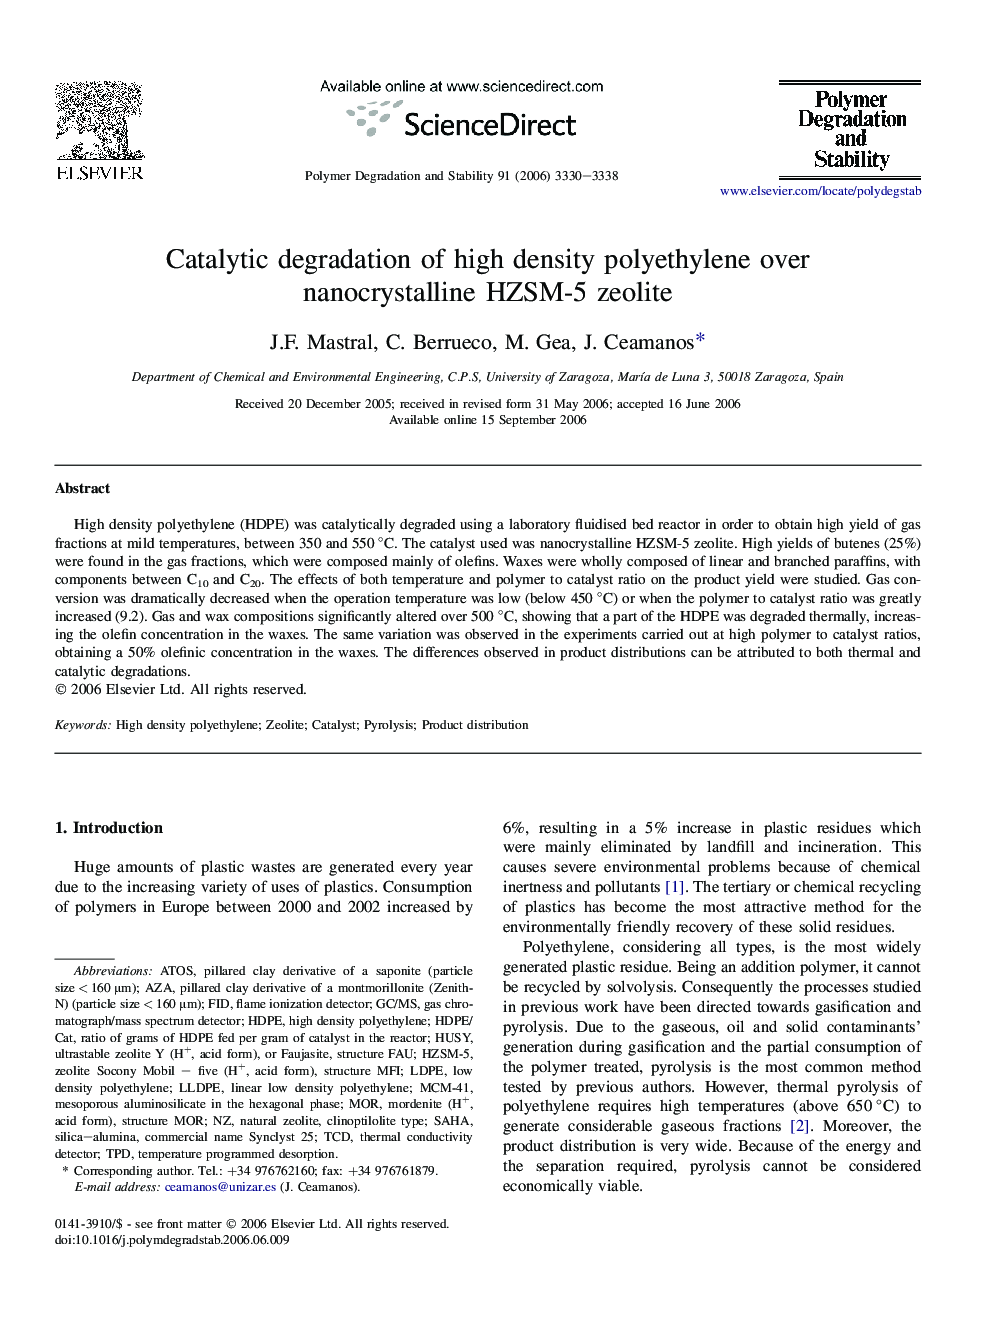 Catalytic degradation of high density polyethylene over nanocrystalline HZSM-5 zeolite